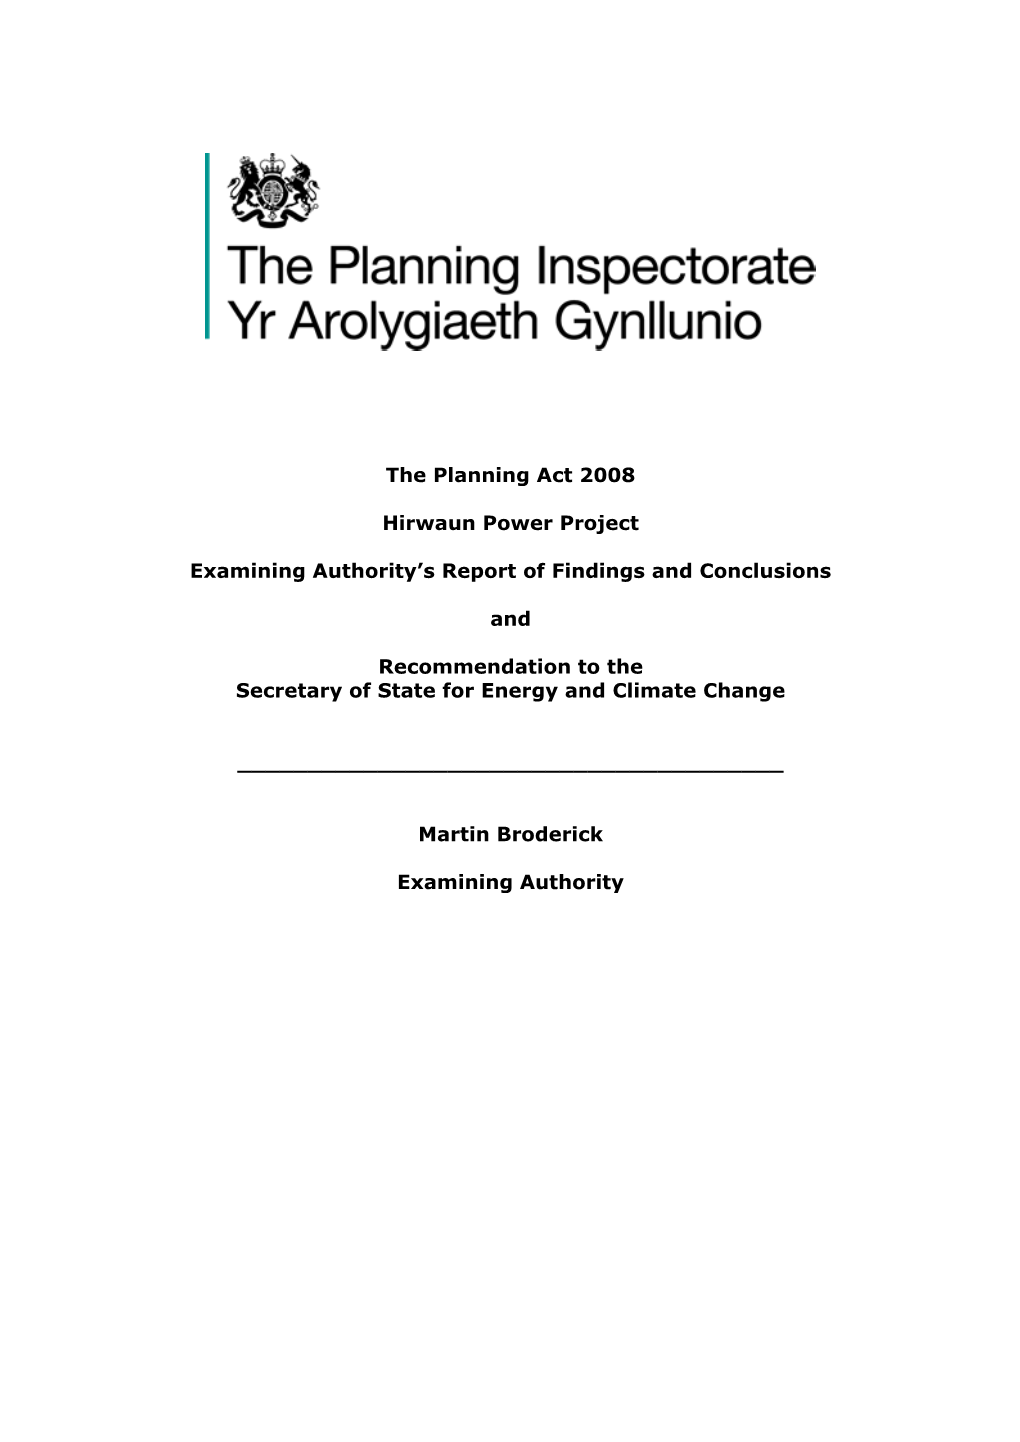 The Planning Act 2008 Hirwaun Power Project Examining